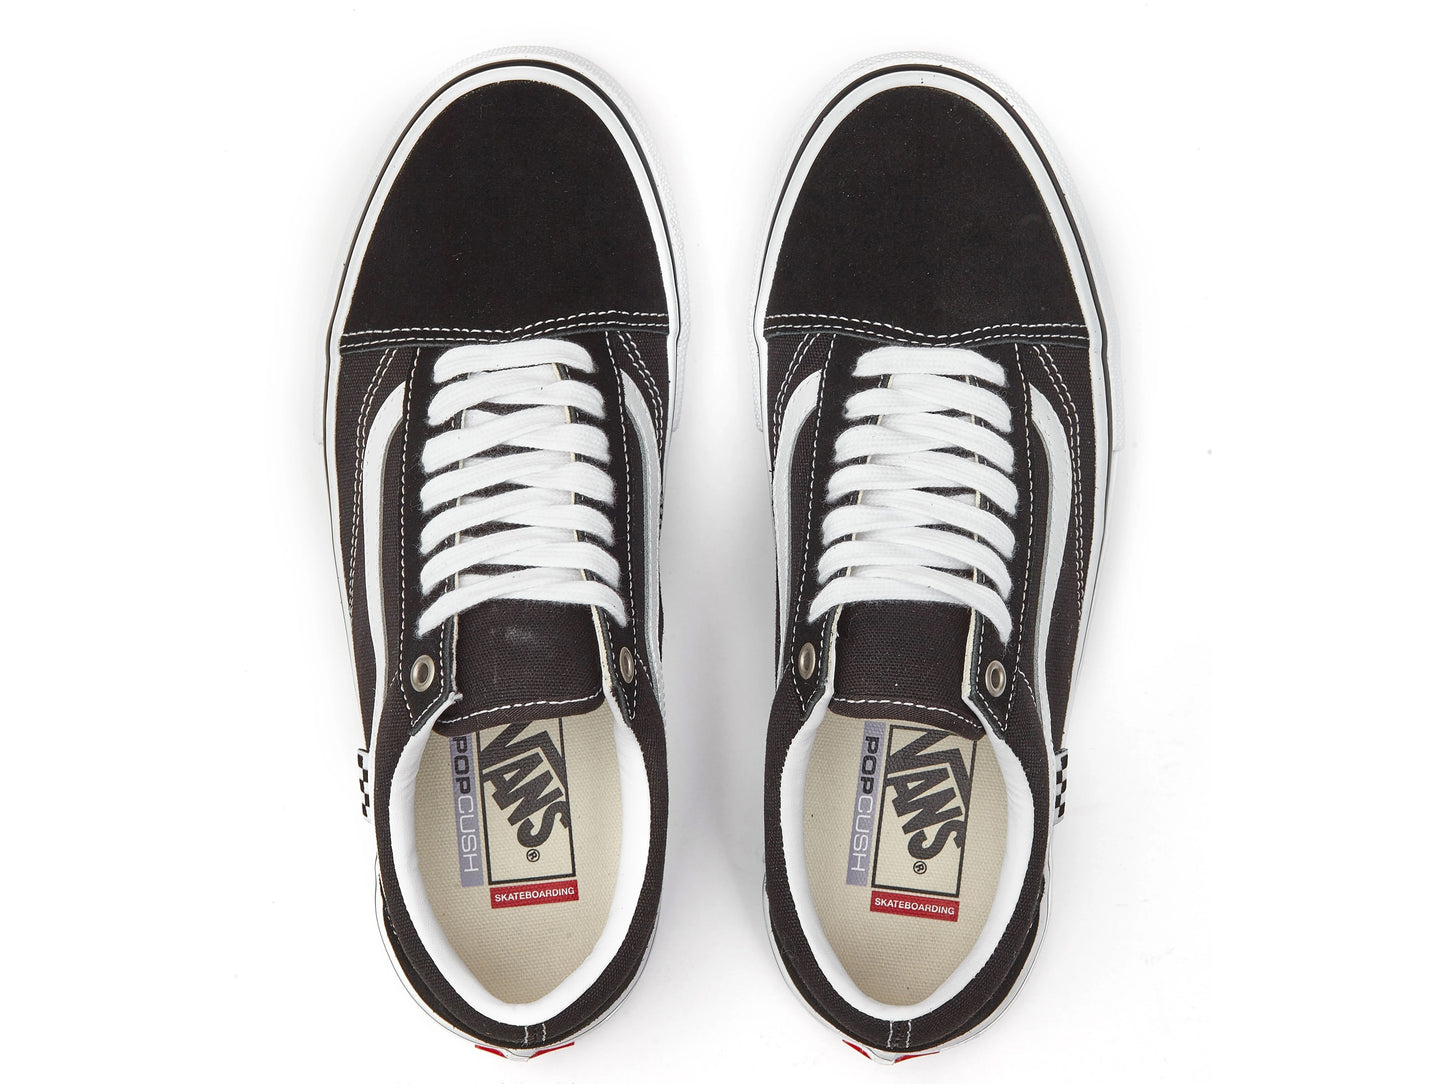 VANS Skate Old Skool Shoes - Black/White